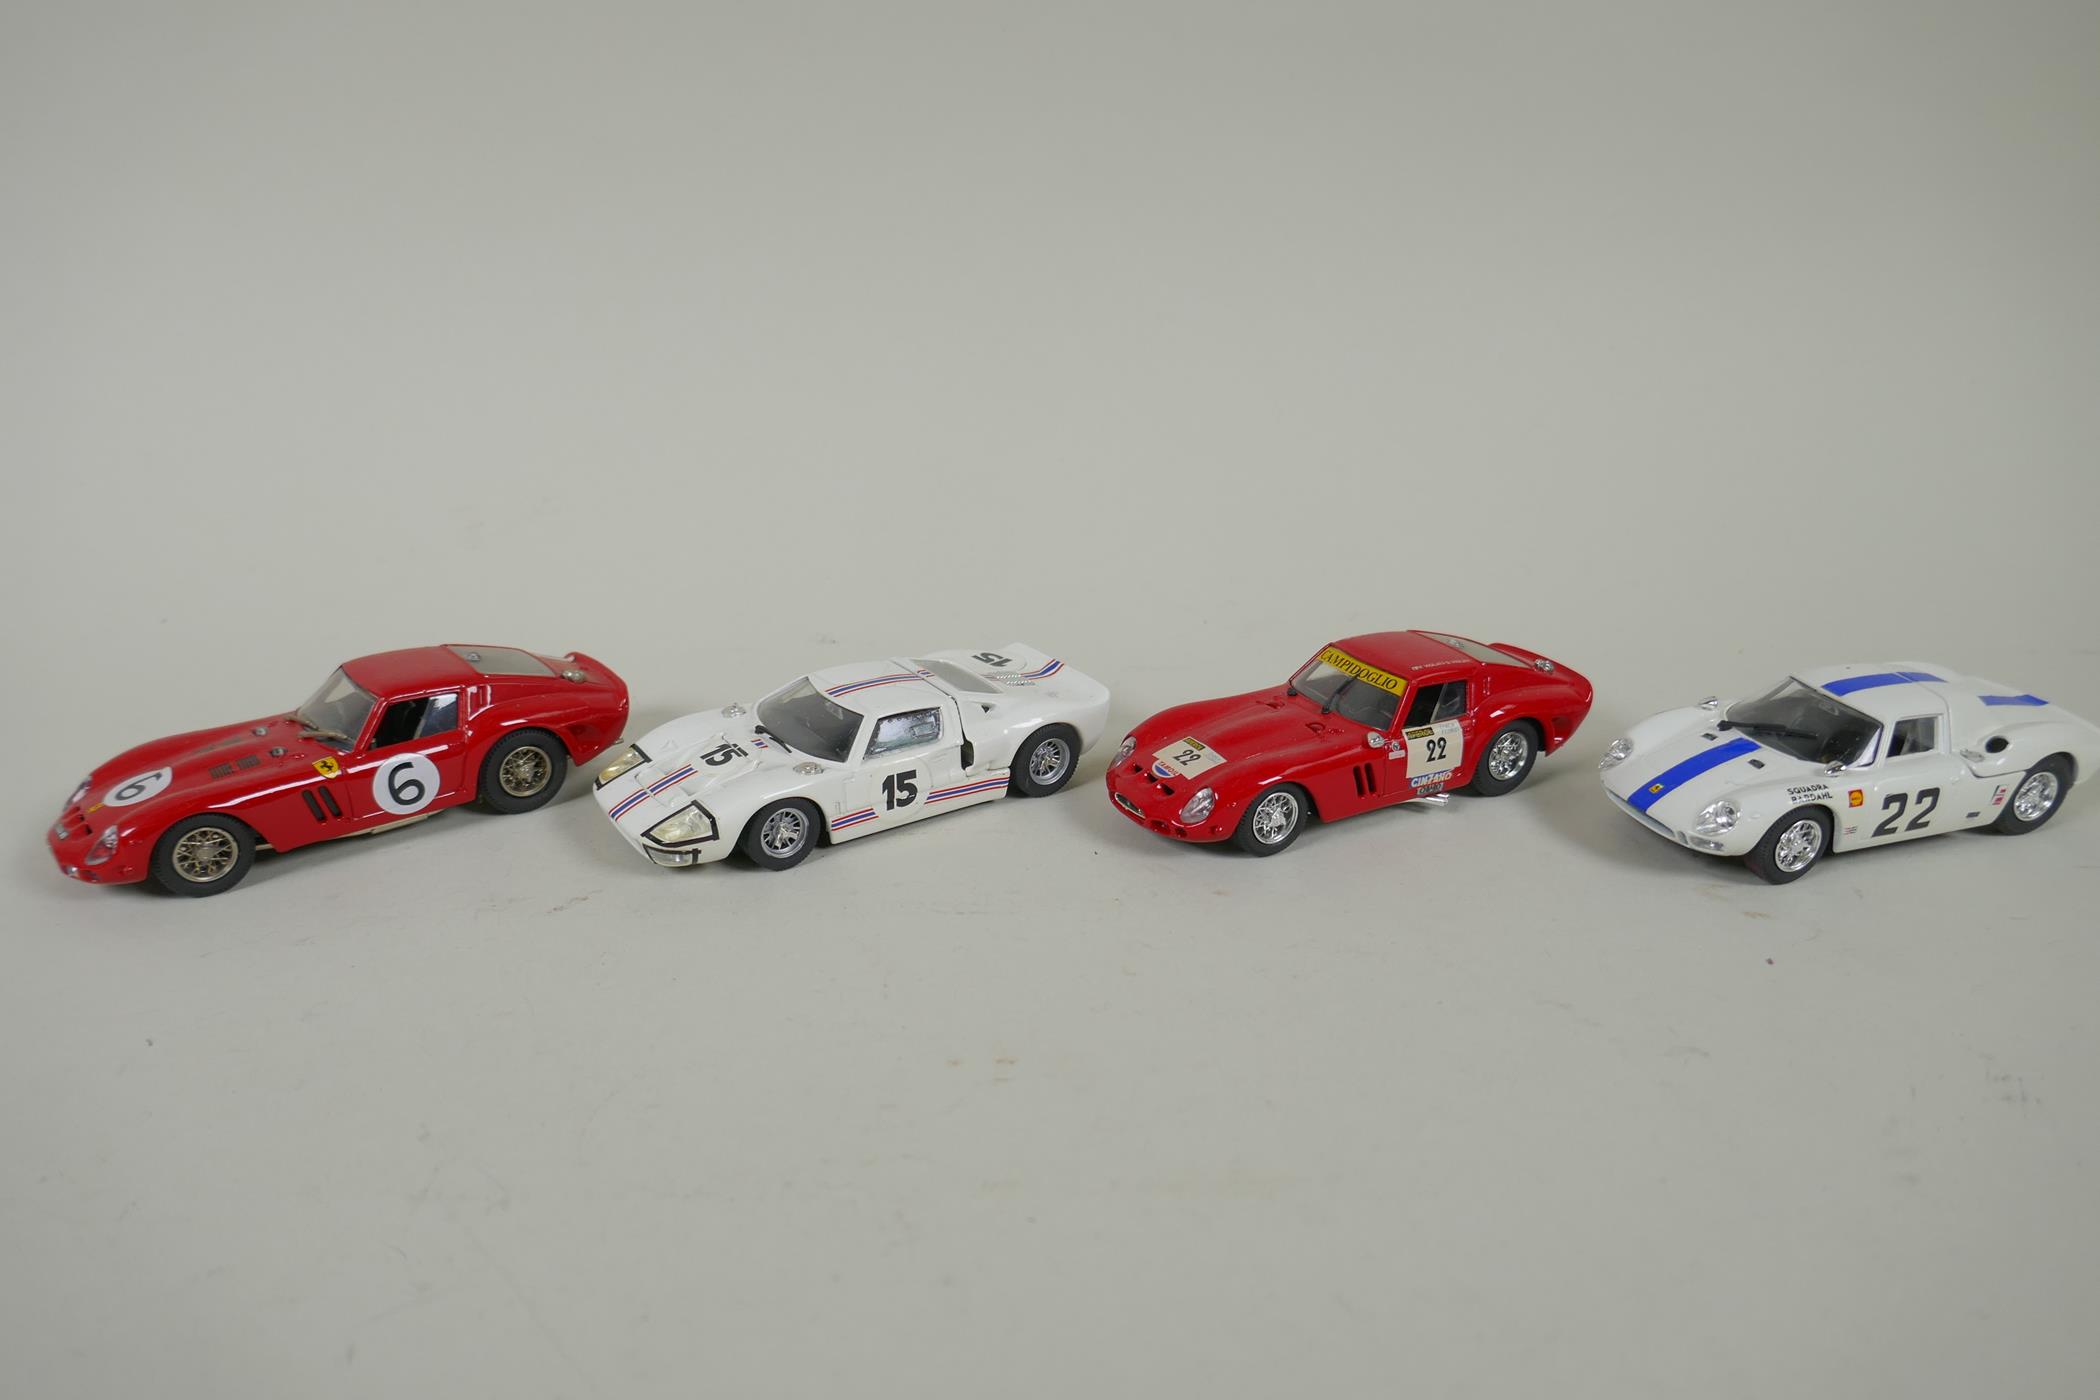 Twenty seven Model Box die cast 1:43 scale model cars, to include a Ford GT40, a Ferrari 275 GTB, - Image 5 of 8